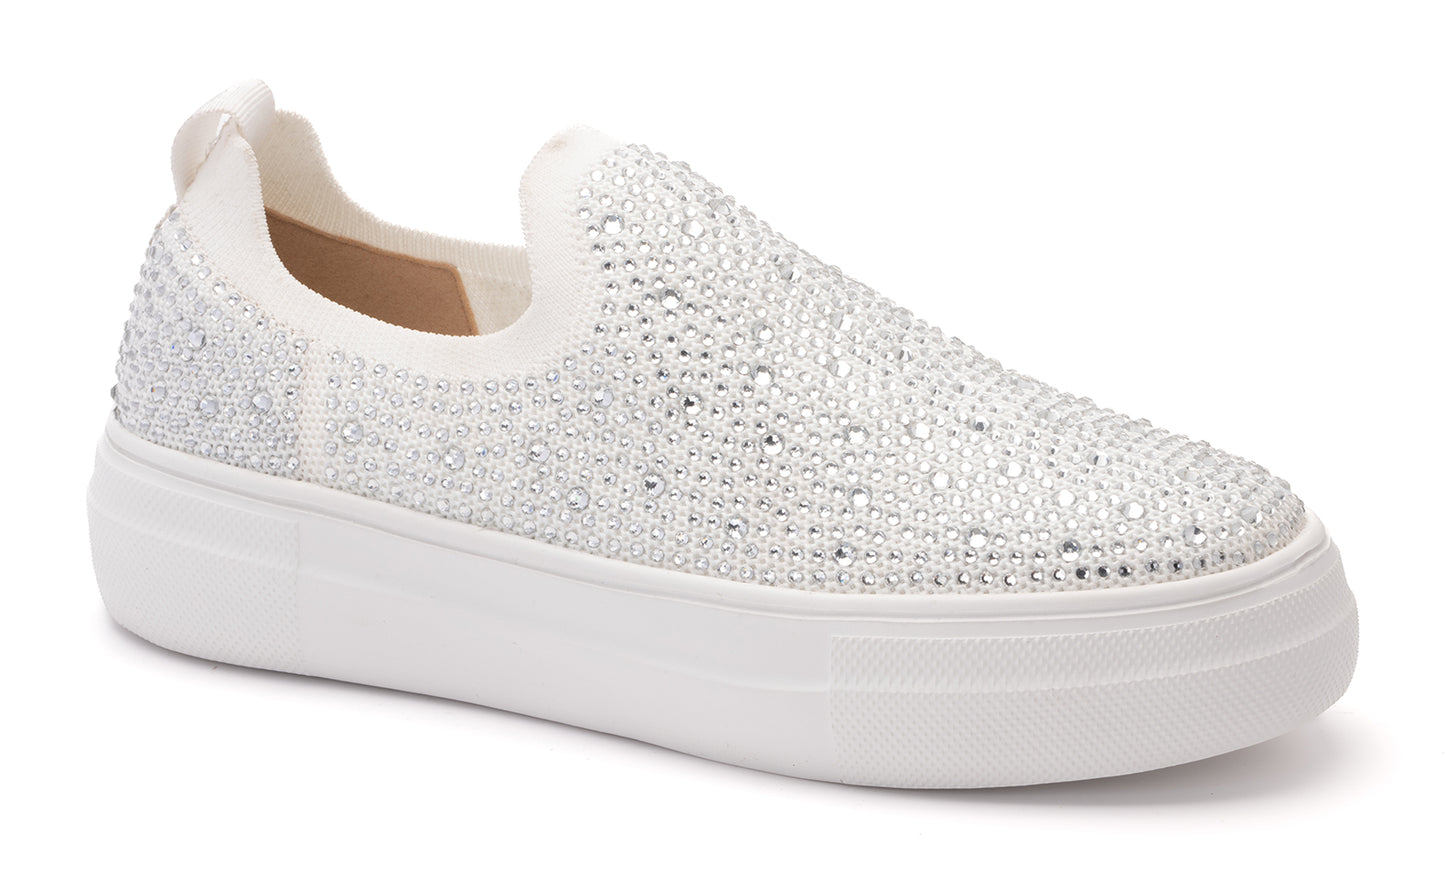 Corkys® "Swank" Crystal Slip On Tennis Shoes in White & Black